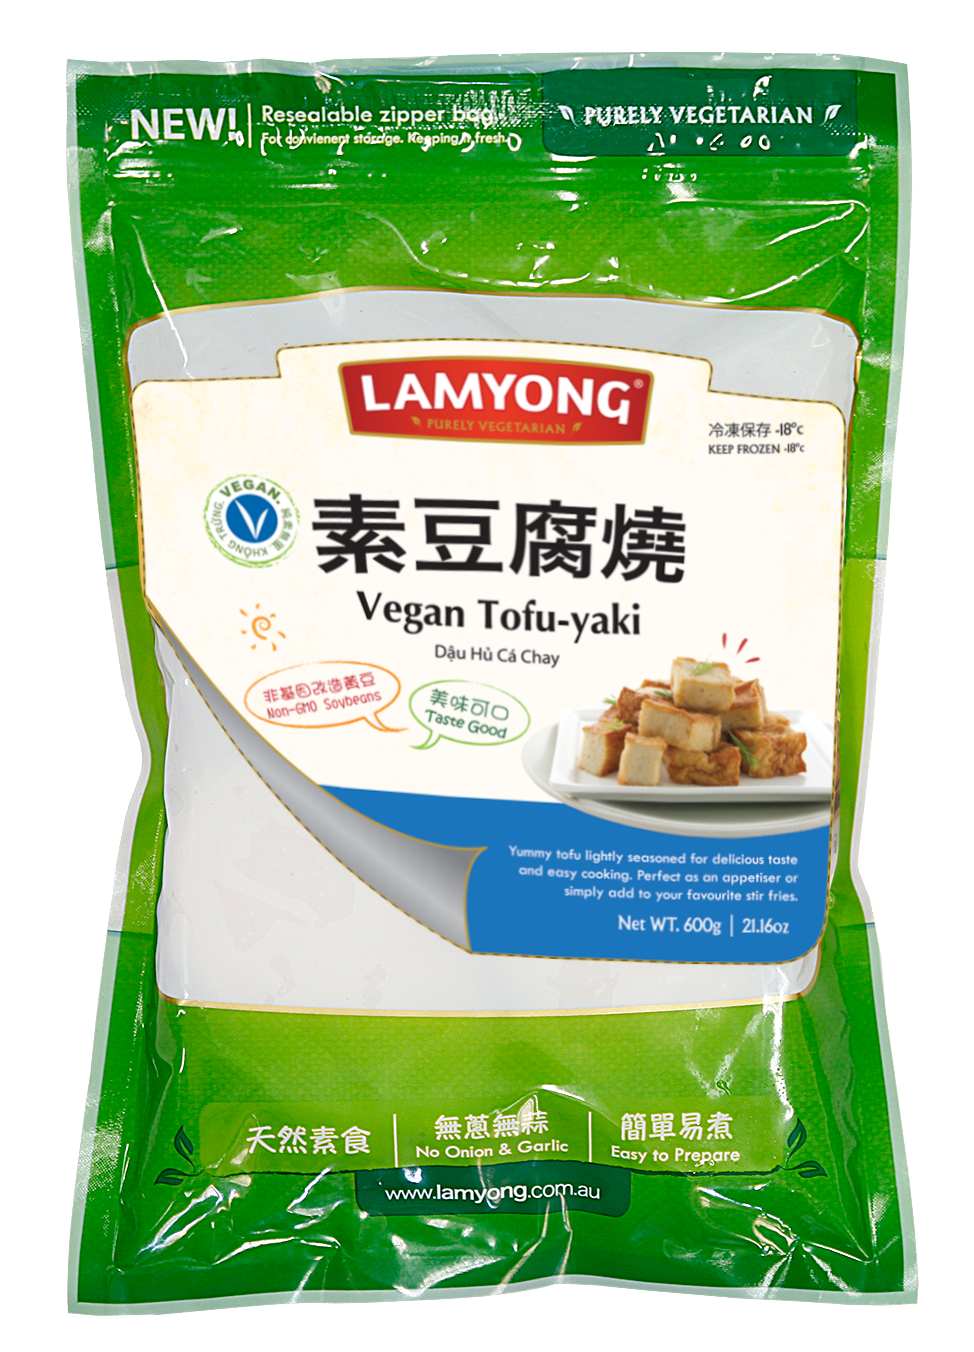 Lamyong - Vegan Tofu-yaki - 3kg